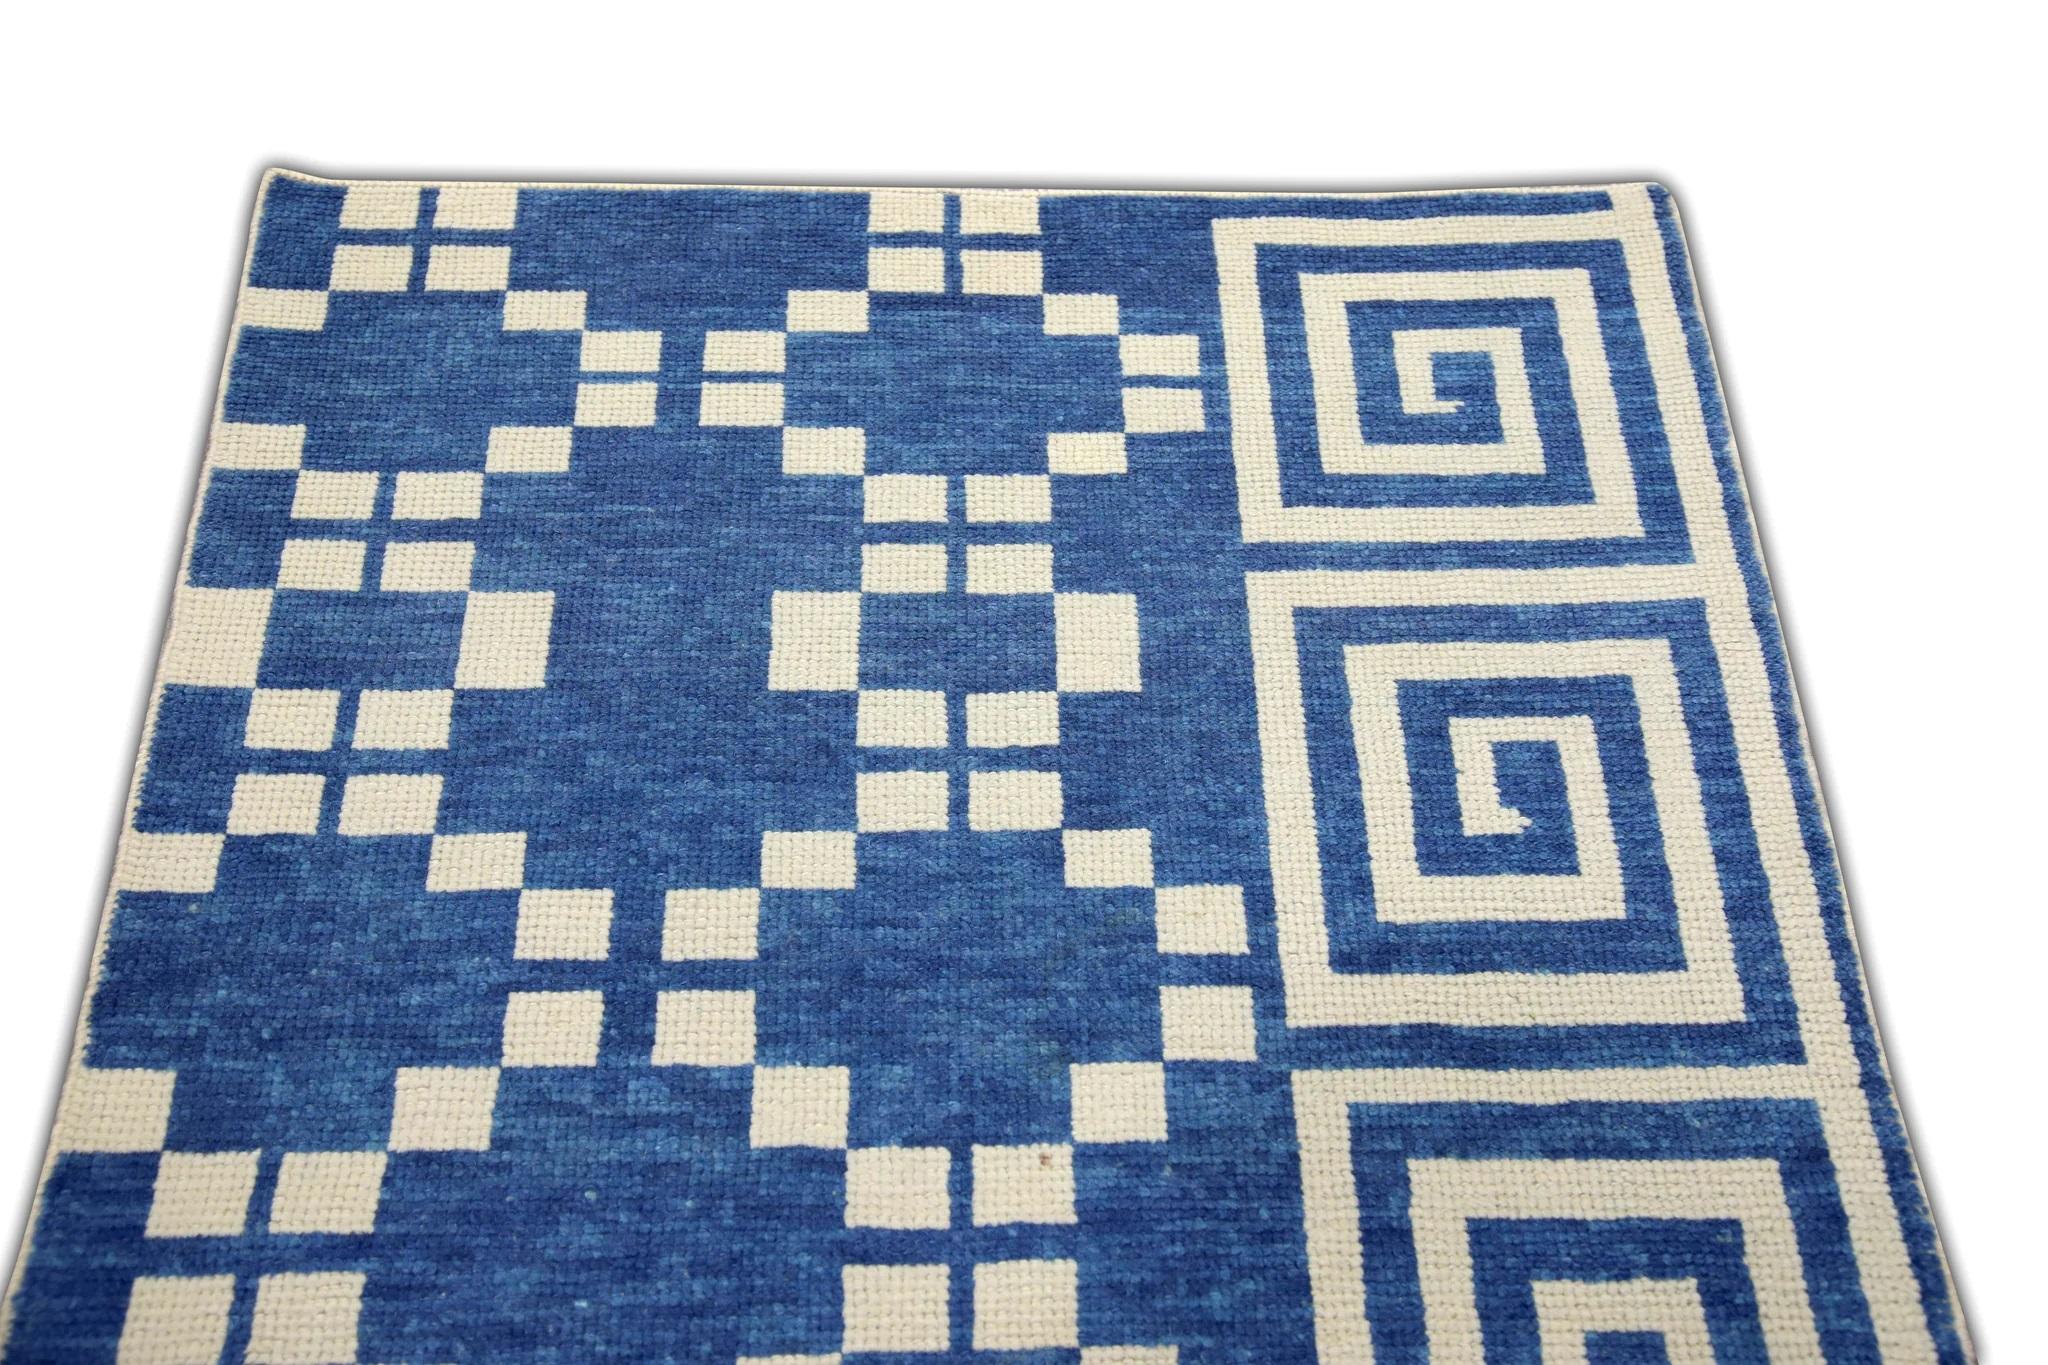 Tribal Geometric Handwoven Turkish Oushak Rug in Blue and Cream 3' x 5'2